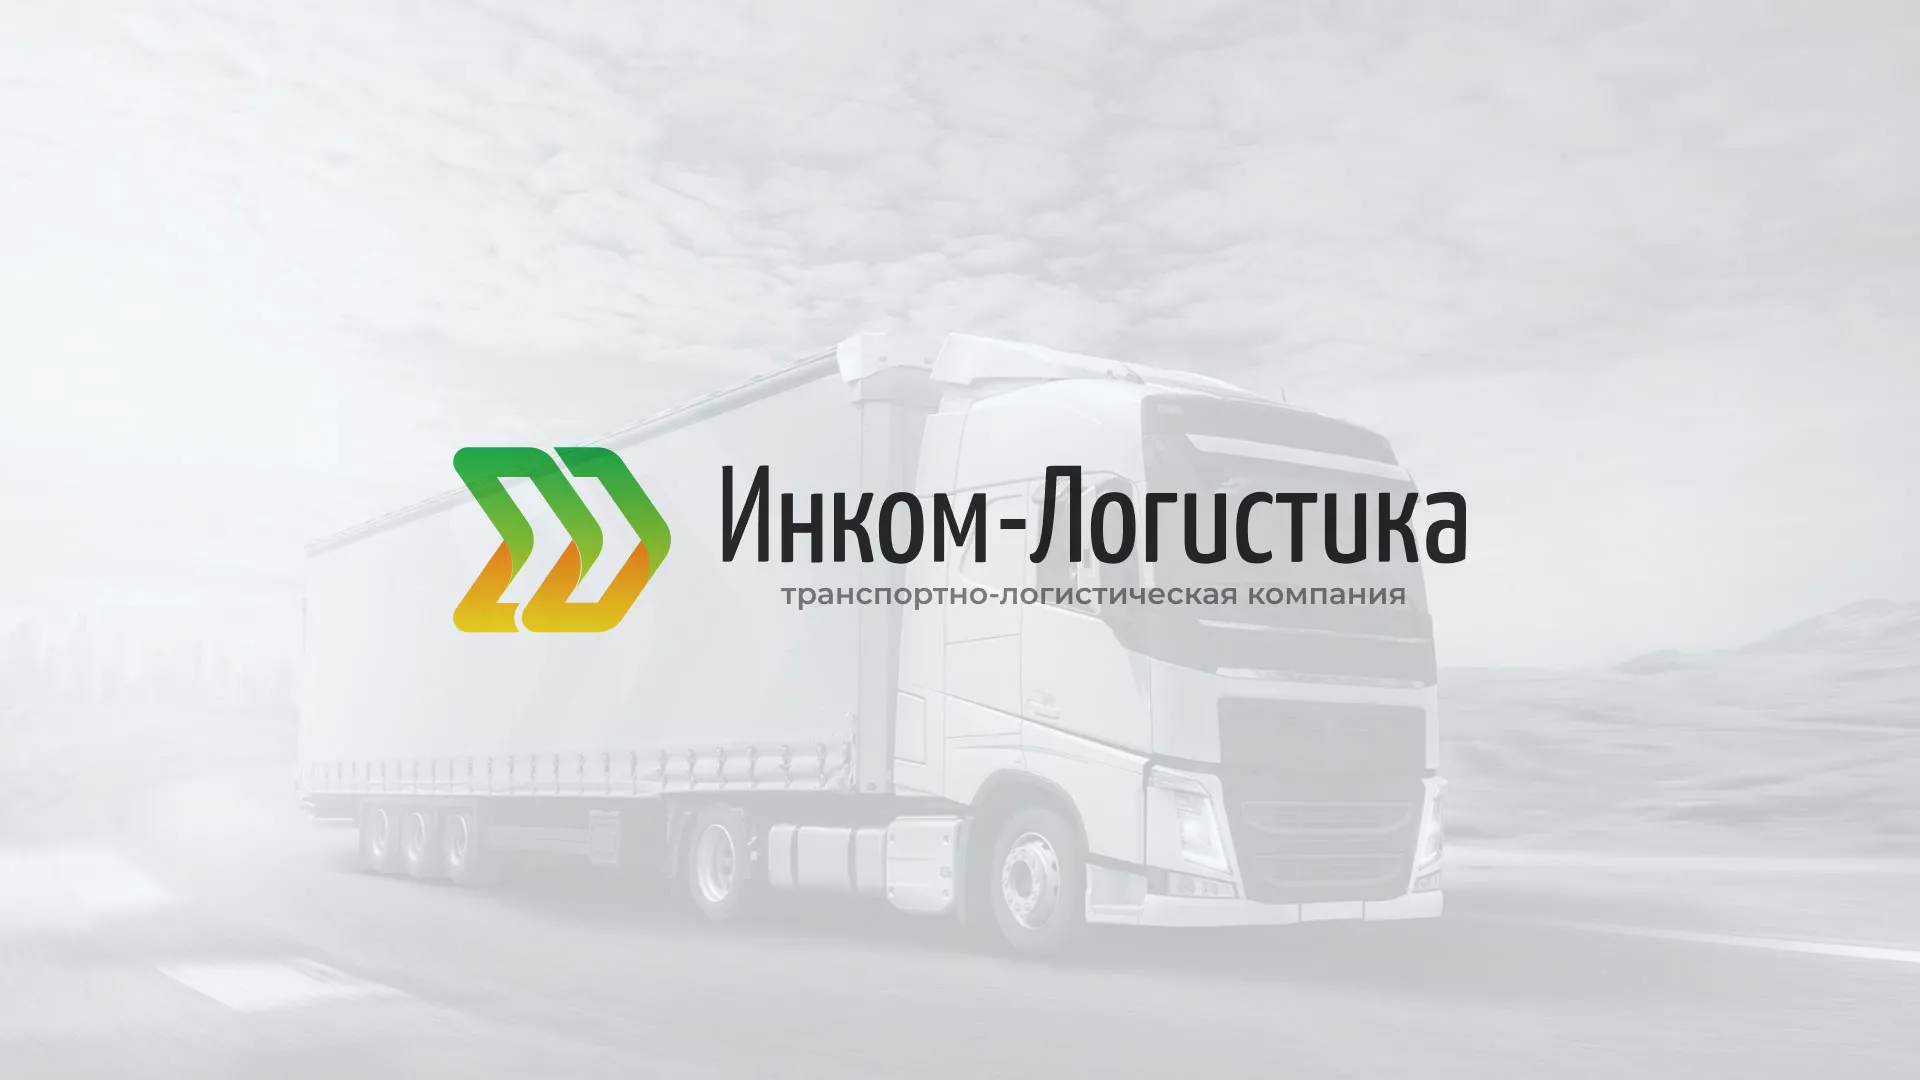 Разработка логотипа и сайта компании «Инком-Логистика» в Иркутске